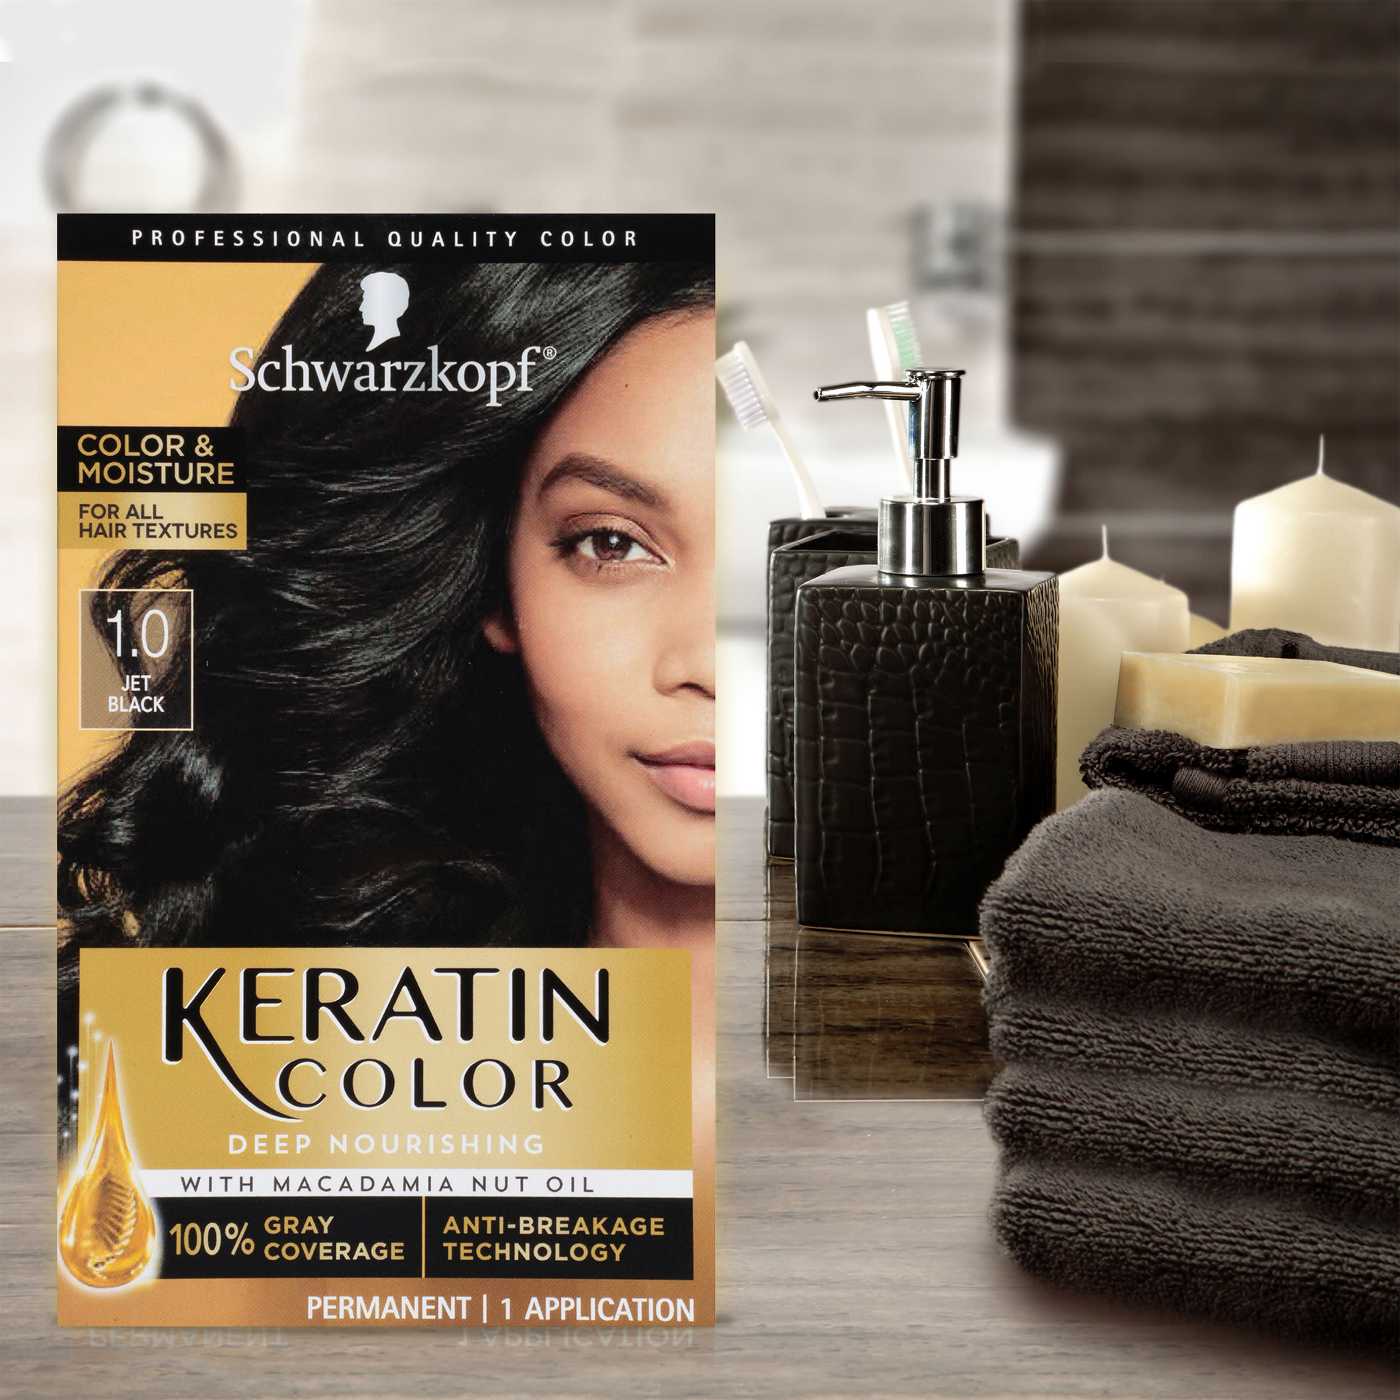 Schwarzkopf Keratin Color, Color & Moisture Permanent Hair Color Cream, 1.0 Jet Black; image 4 of 6